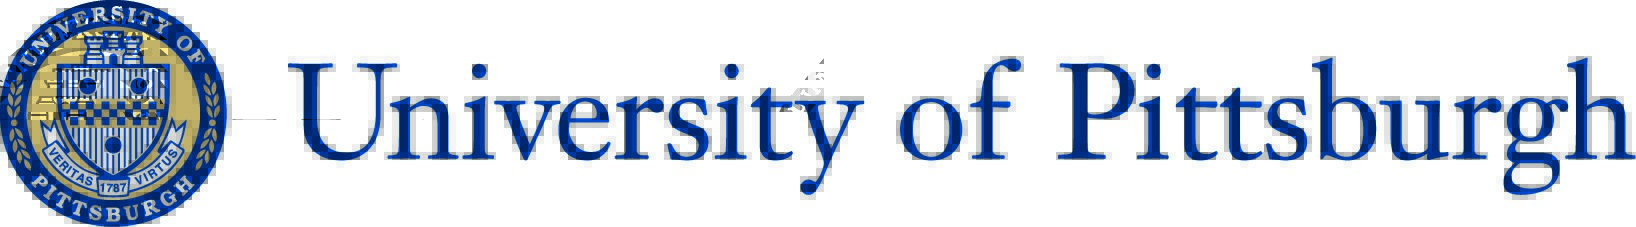 University of Pittsburgh Logo - University of Pittsburgh logo